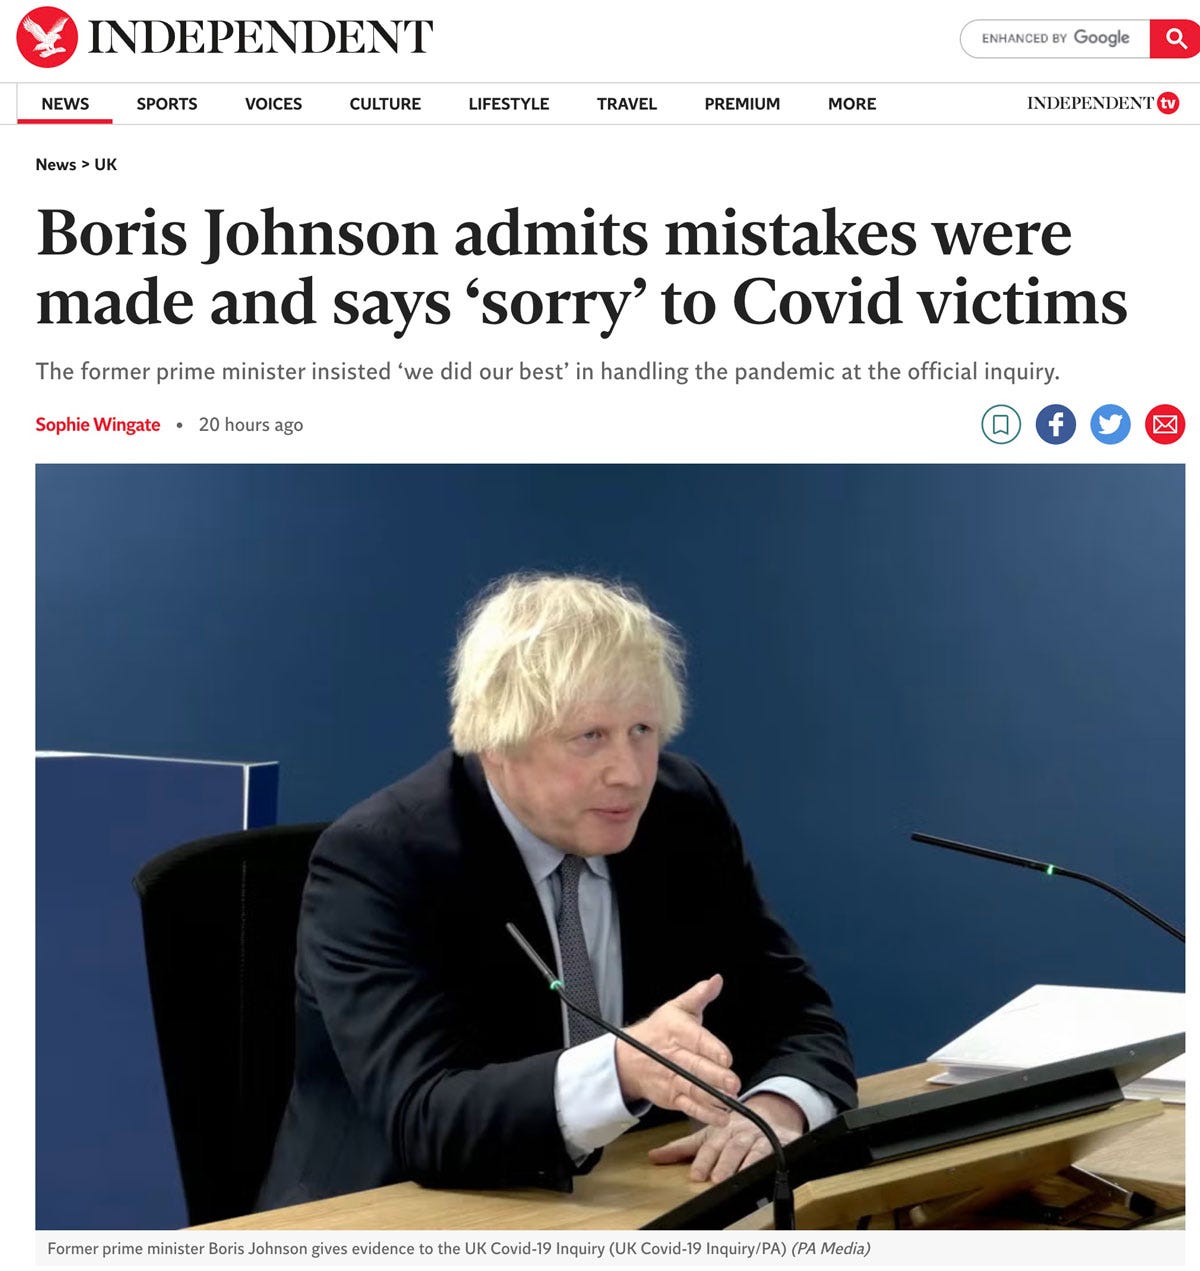 Independent: Boris Johnson, Mistakes Were Made